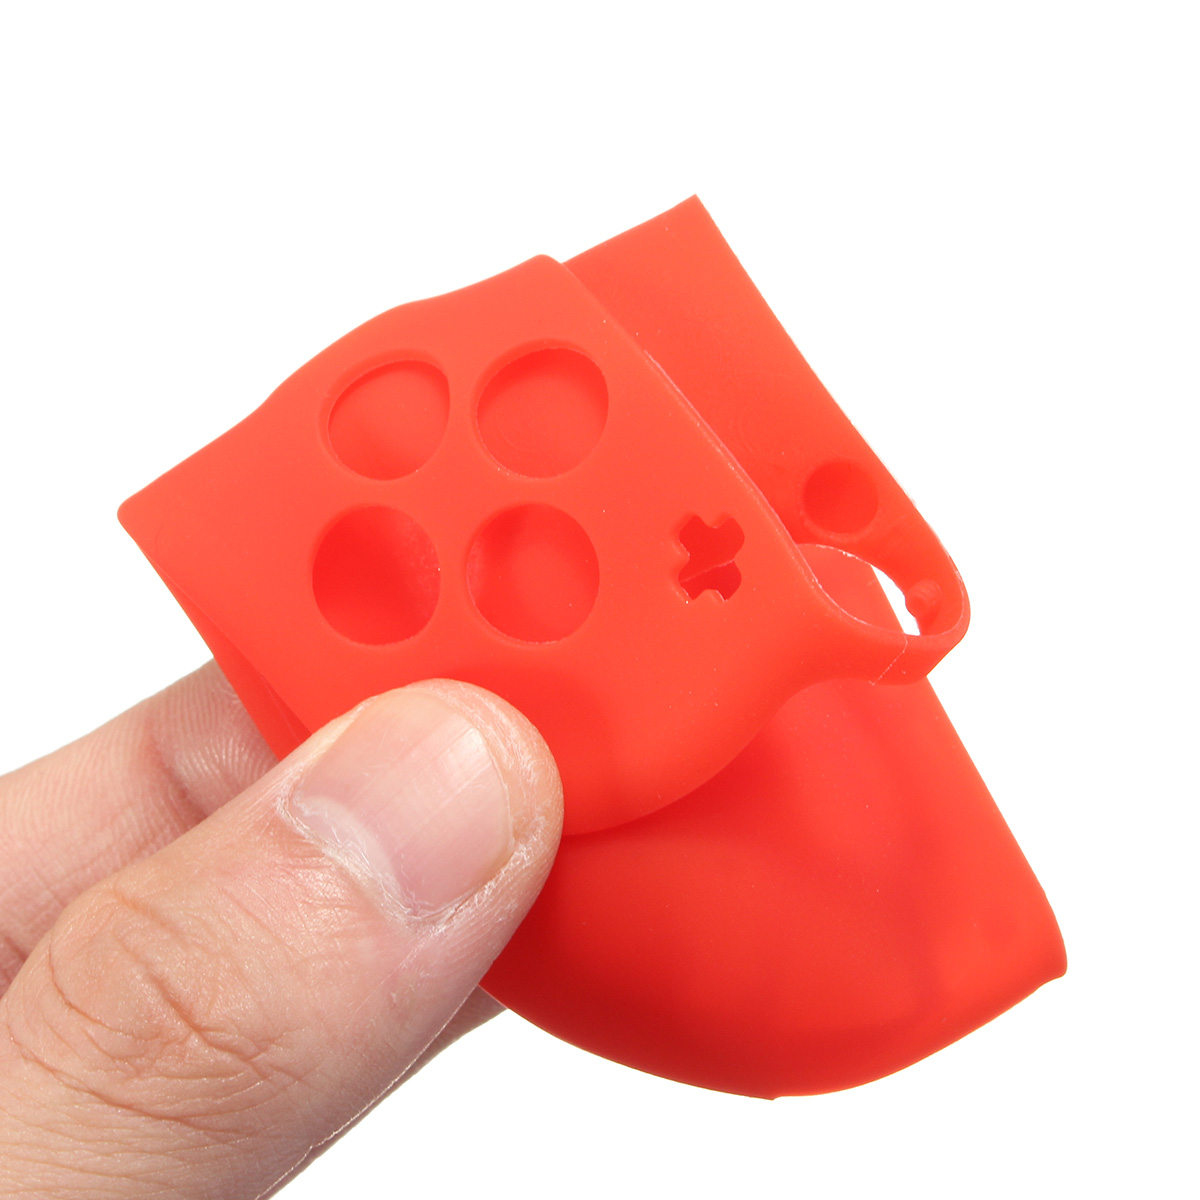 Silicon Case Protective Impact Resistant Rubber Skin Cover For Nintendo Switch Joy-Con Controller 31